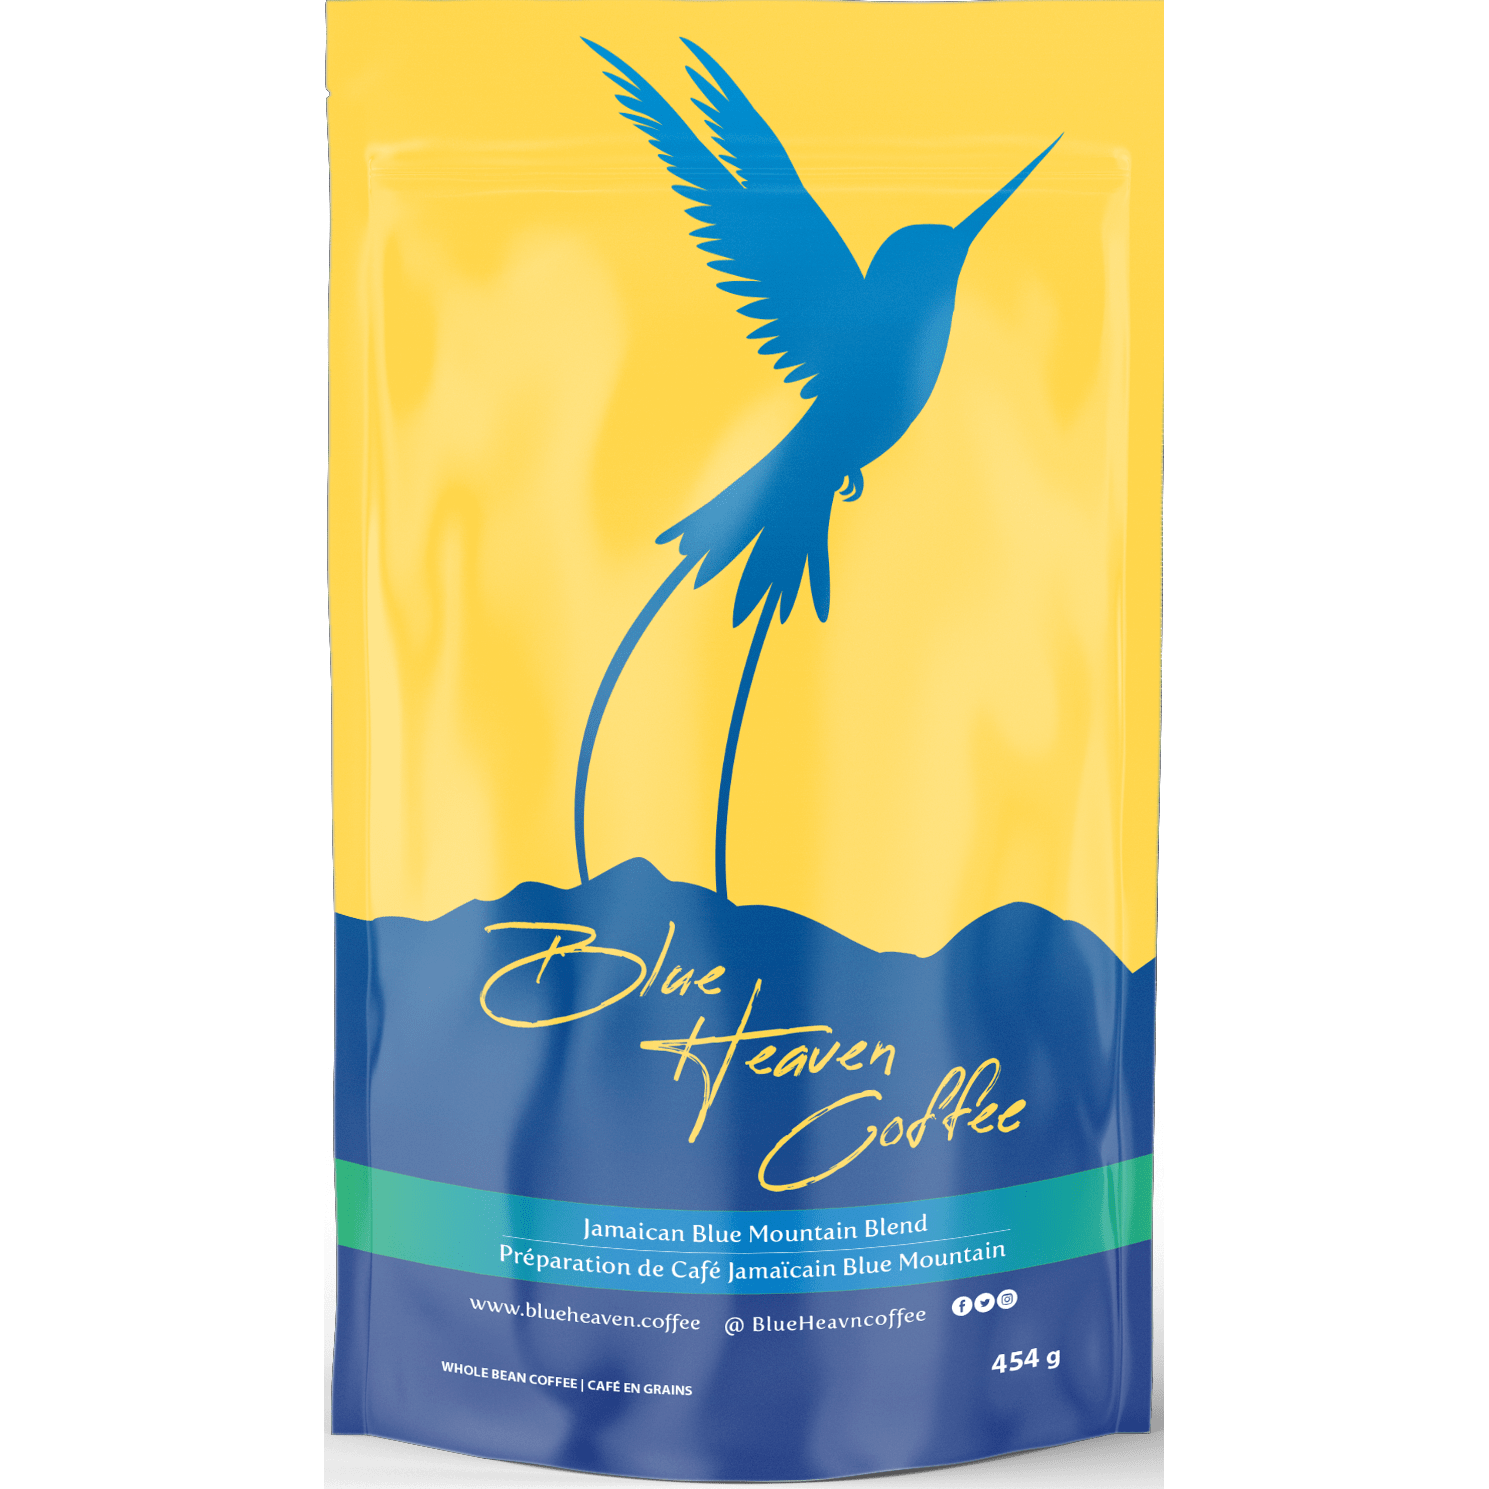 Blue Heaven Coffee - Premium Jamaican Blue Mountain Coffee Blend - Dark Roast 1lb